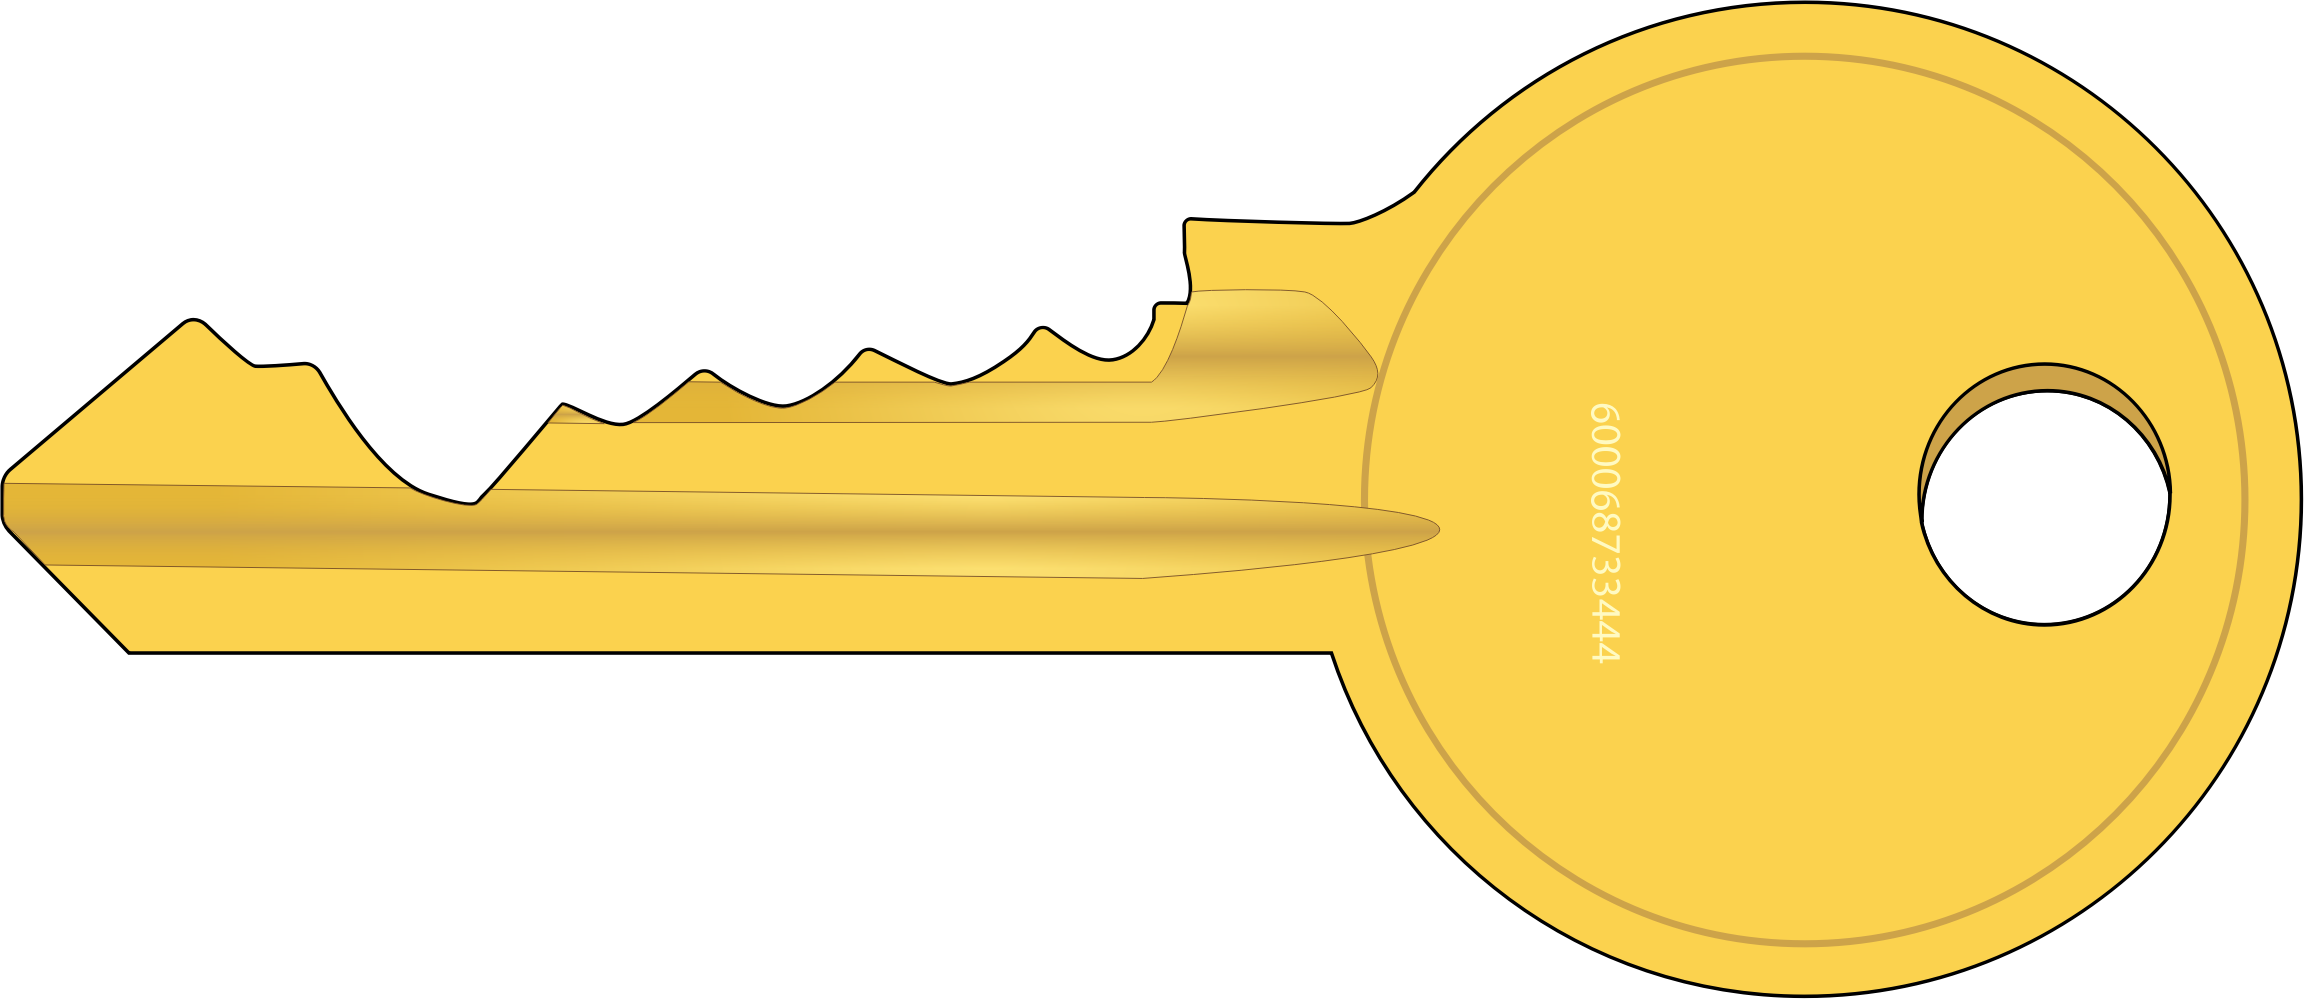 key metal plain